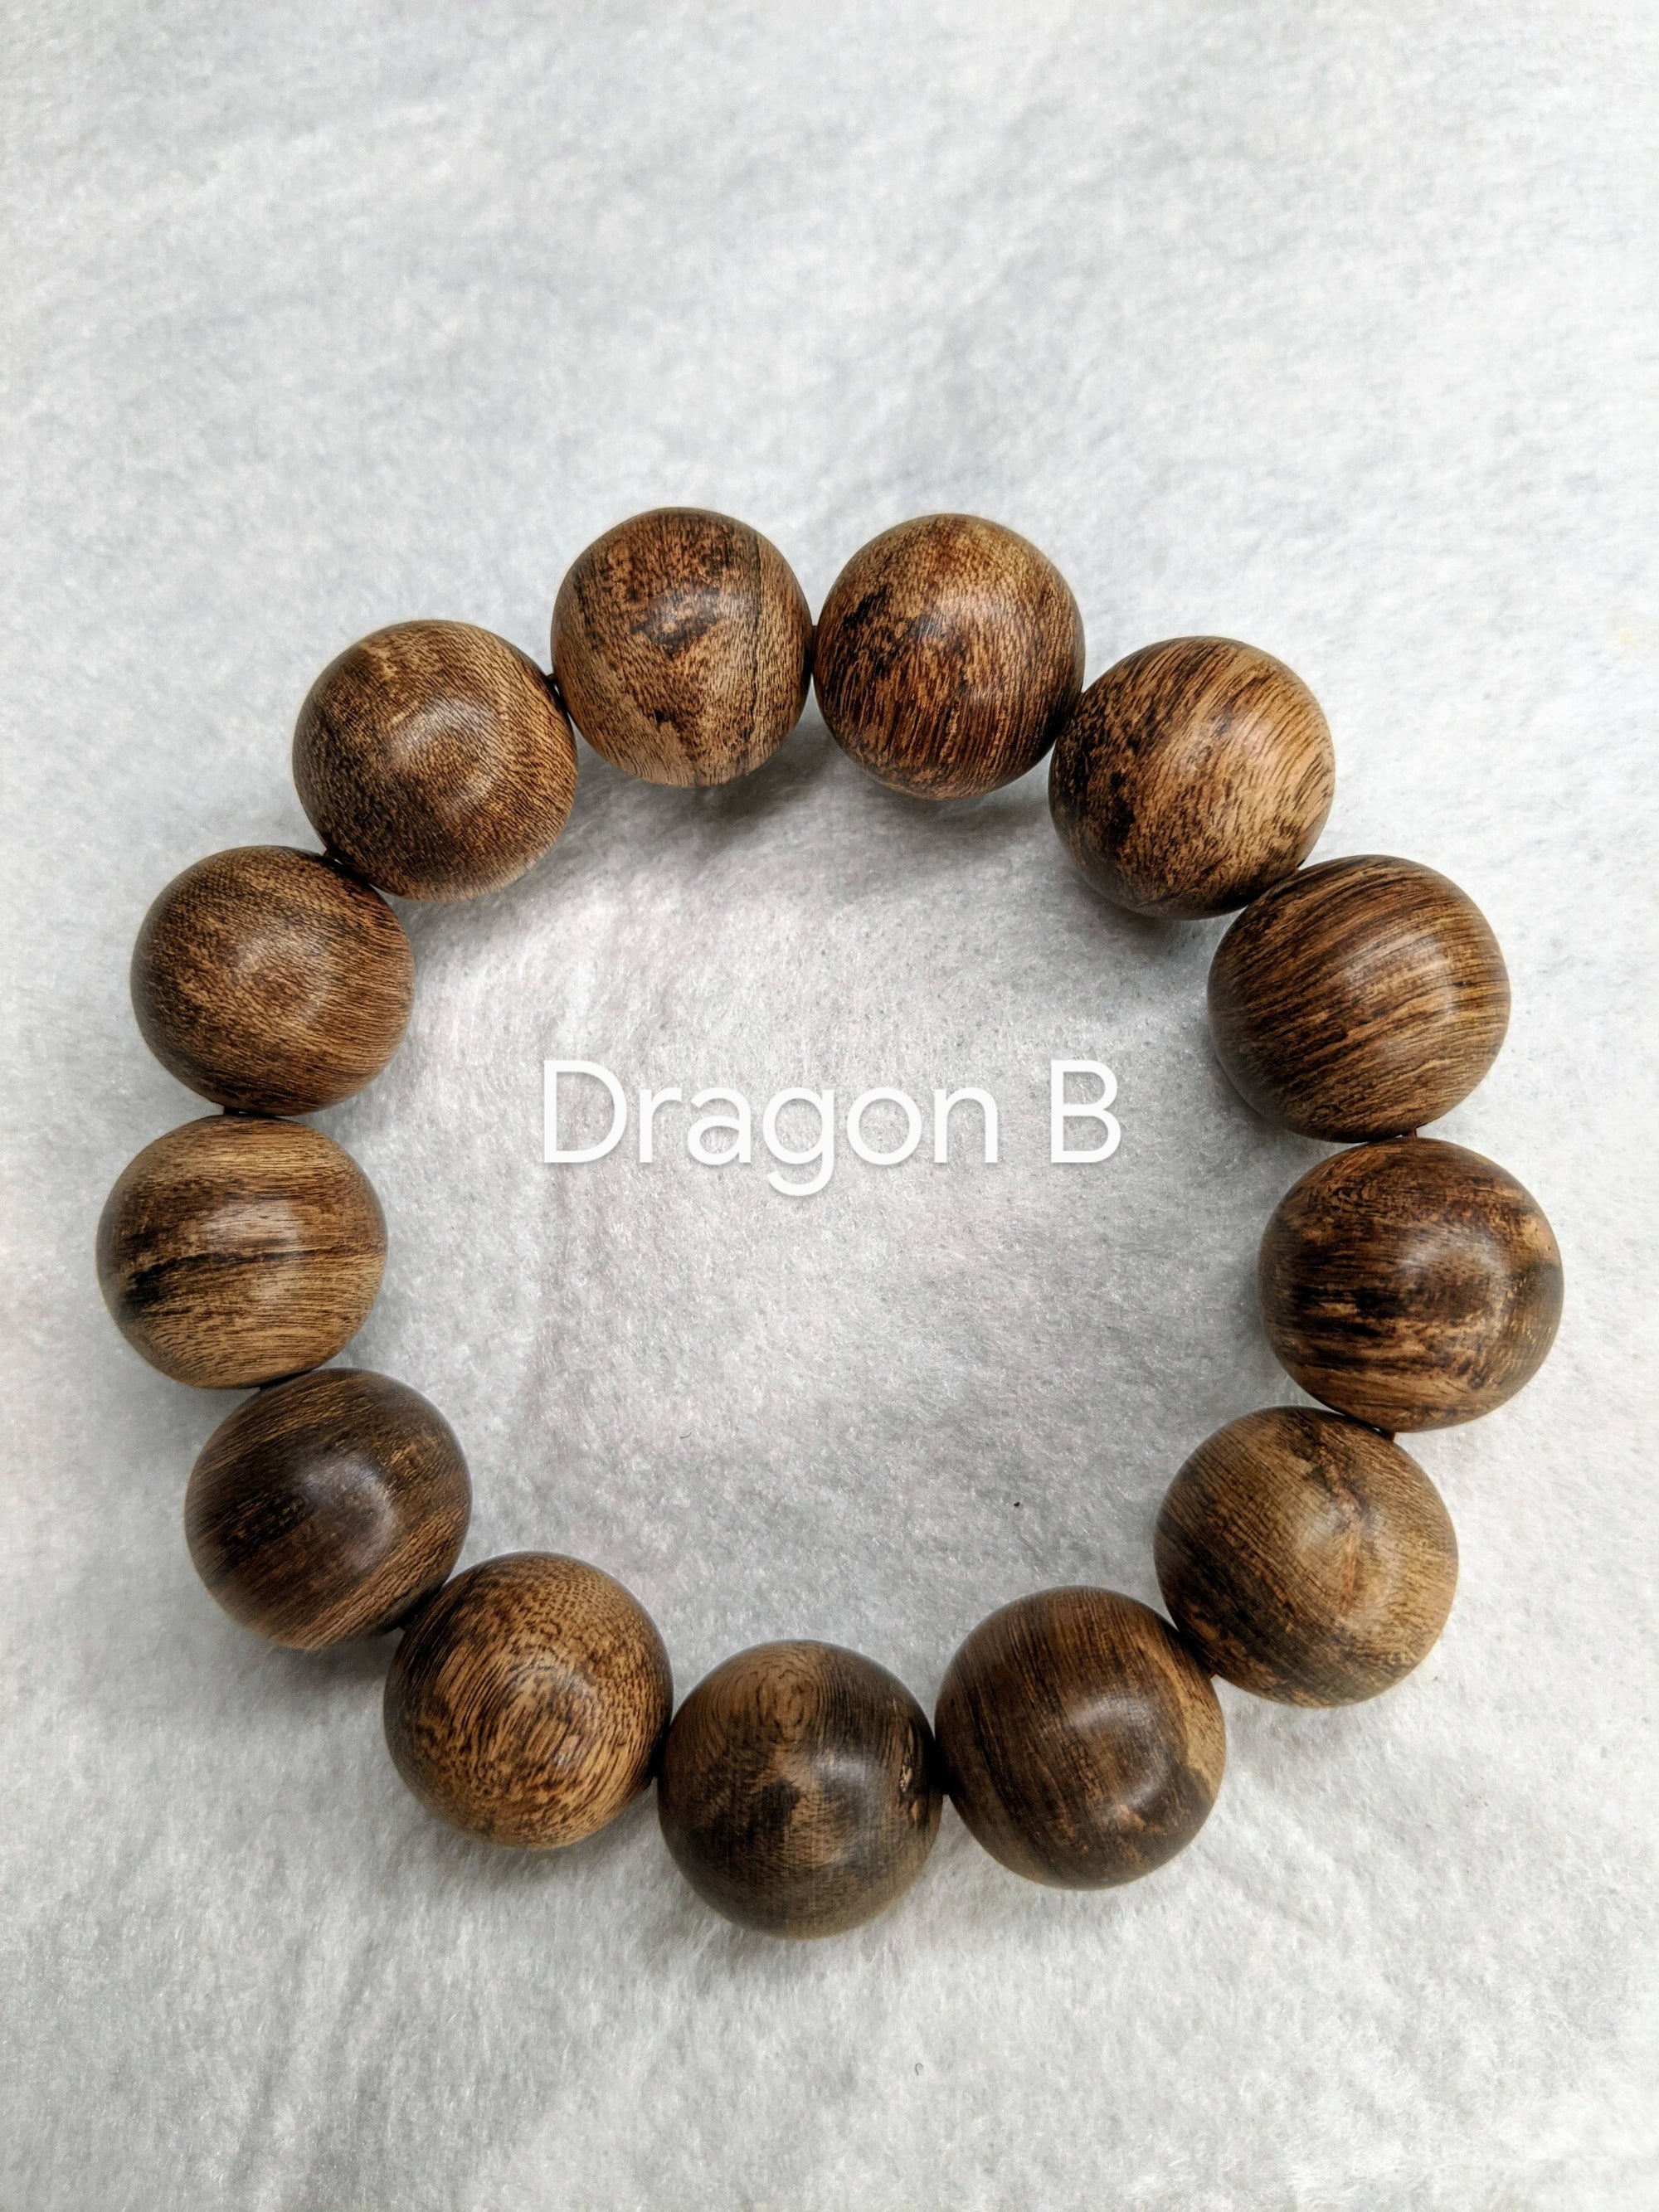 Double Dragon SL Wild Agarwood Bracelet 13 beads 18mm 29g - Dragon B